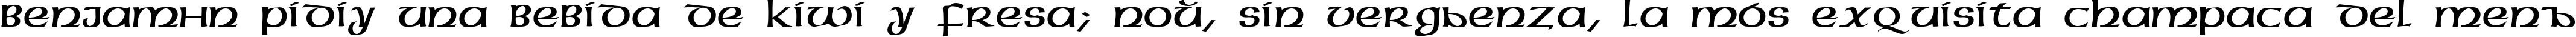 Пример написания шрифтом American Uncial Normal текста на испанском